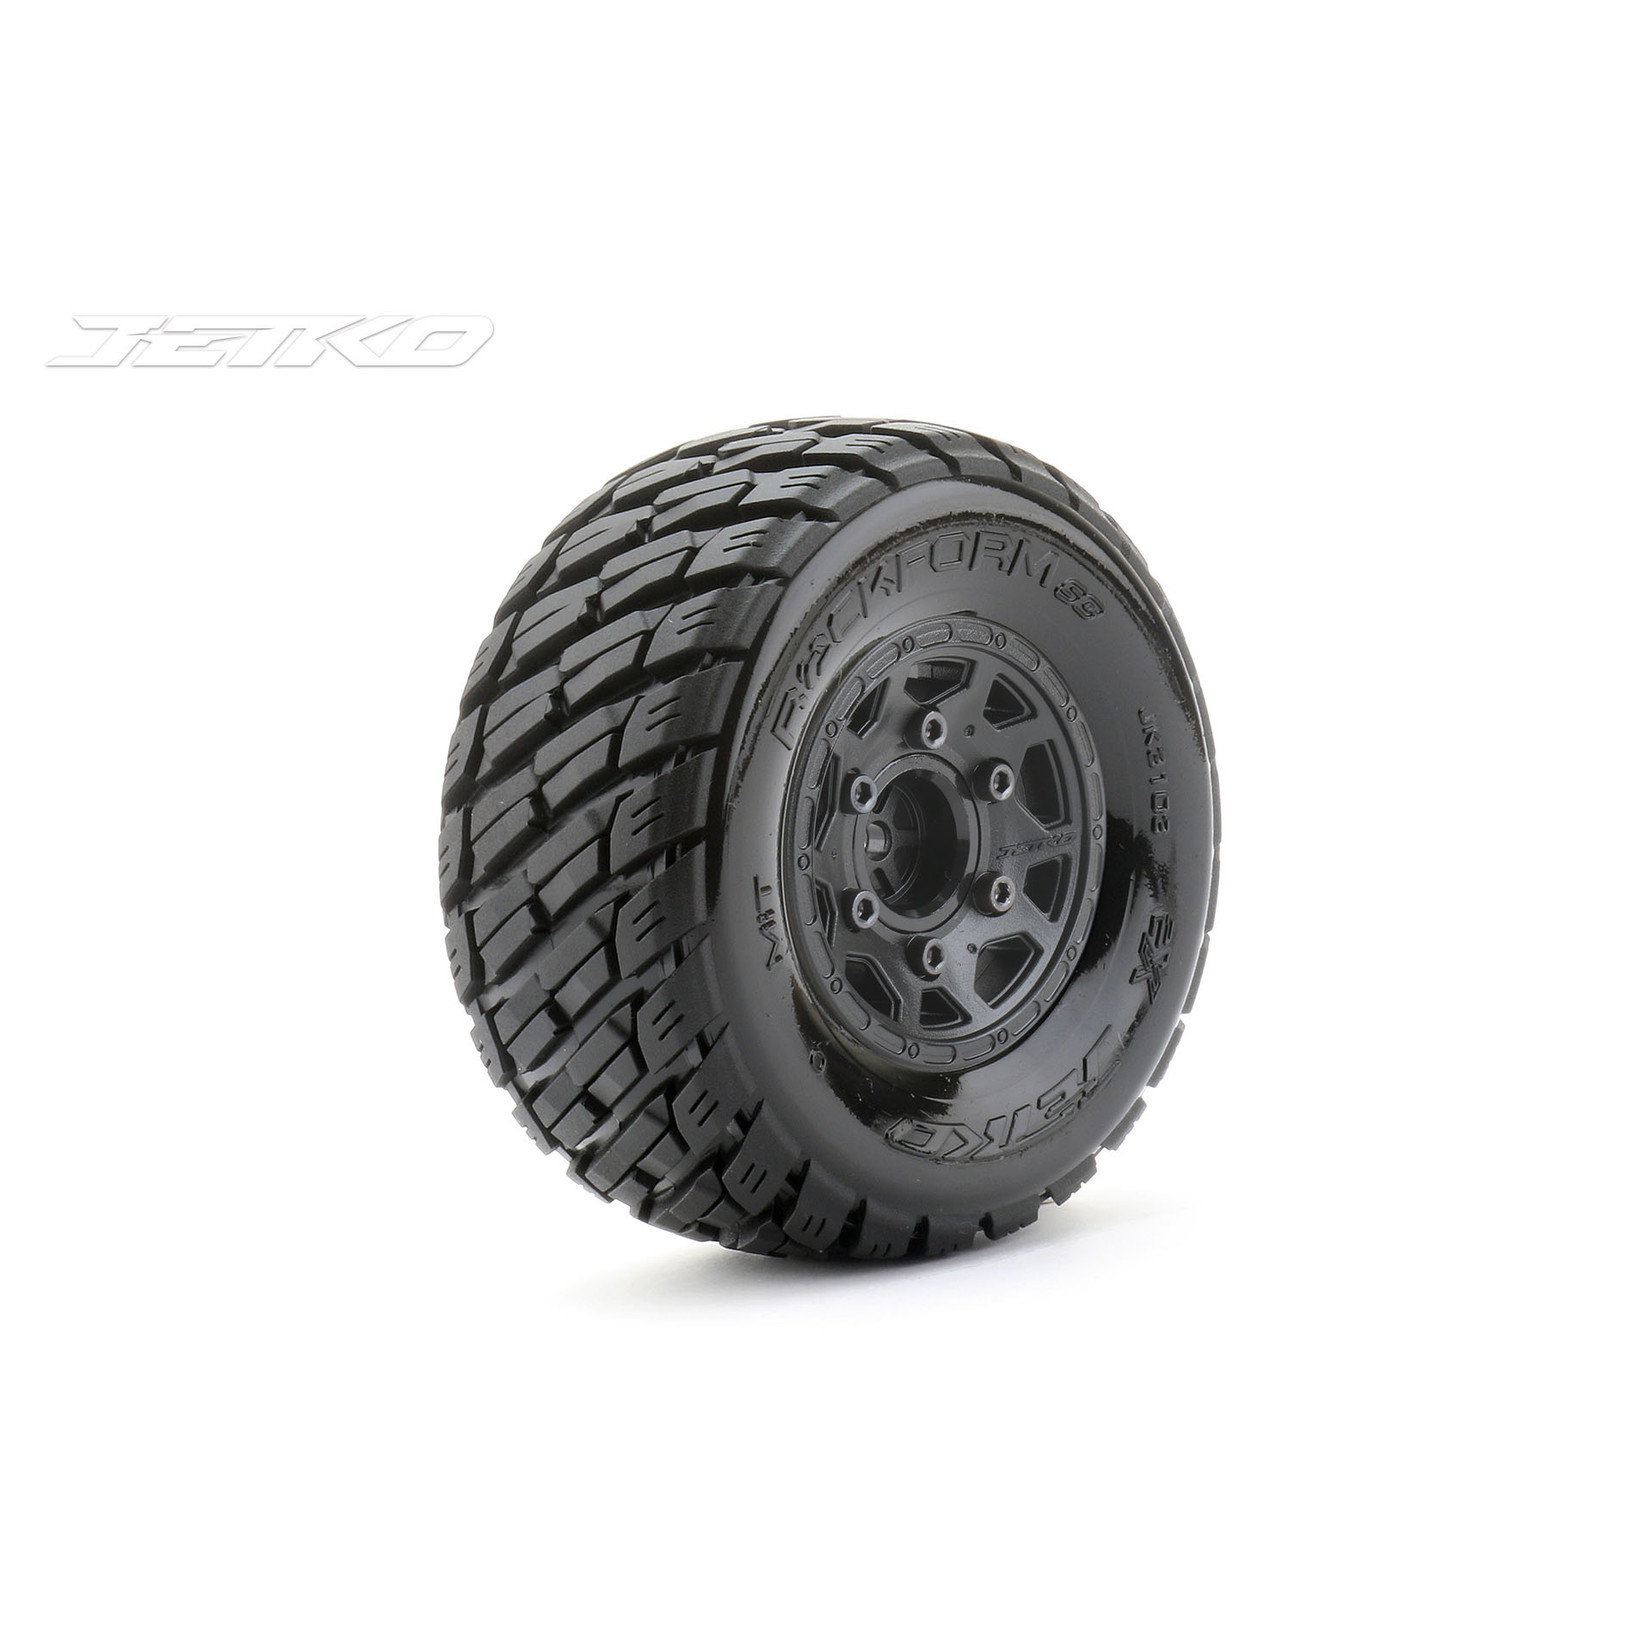 Jetko Tires Jetko Tires 1/10 SC Rockform Tires Mounted on Black Claw Rims, Medium Soft, 14mm Hex, for Arrma # JKO3103CBMSGNB3